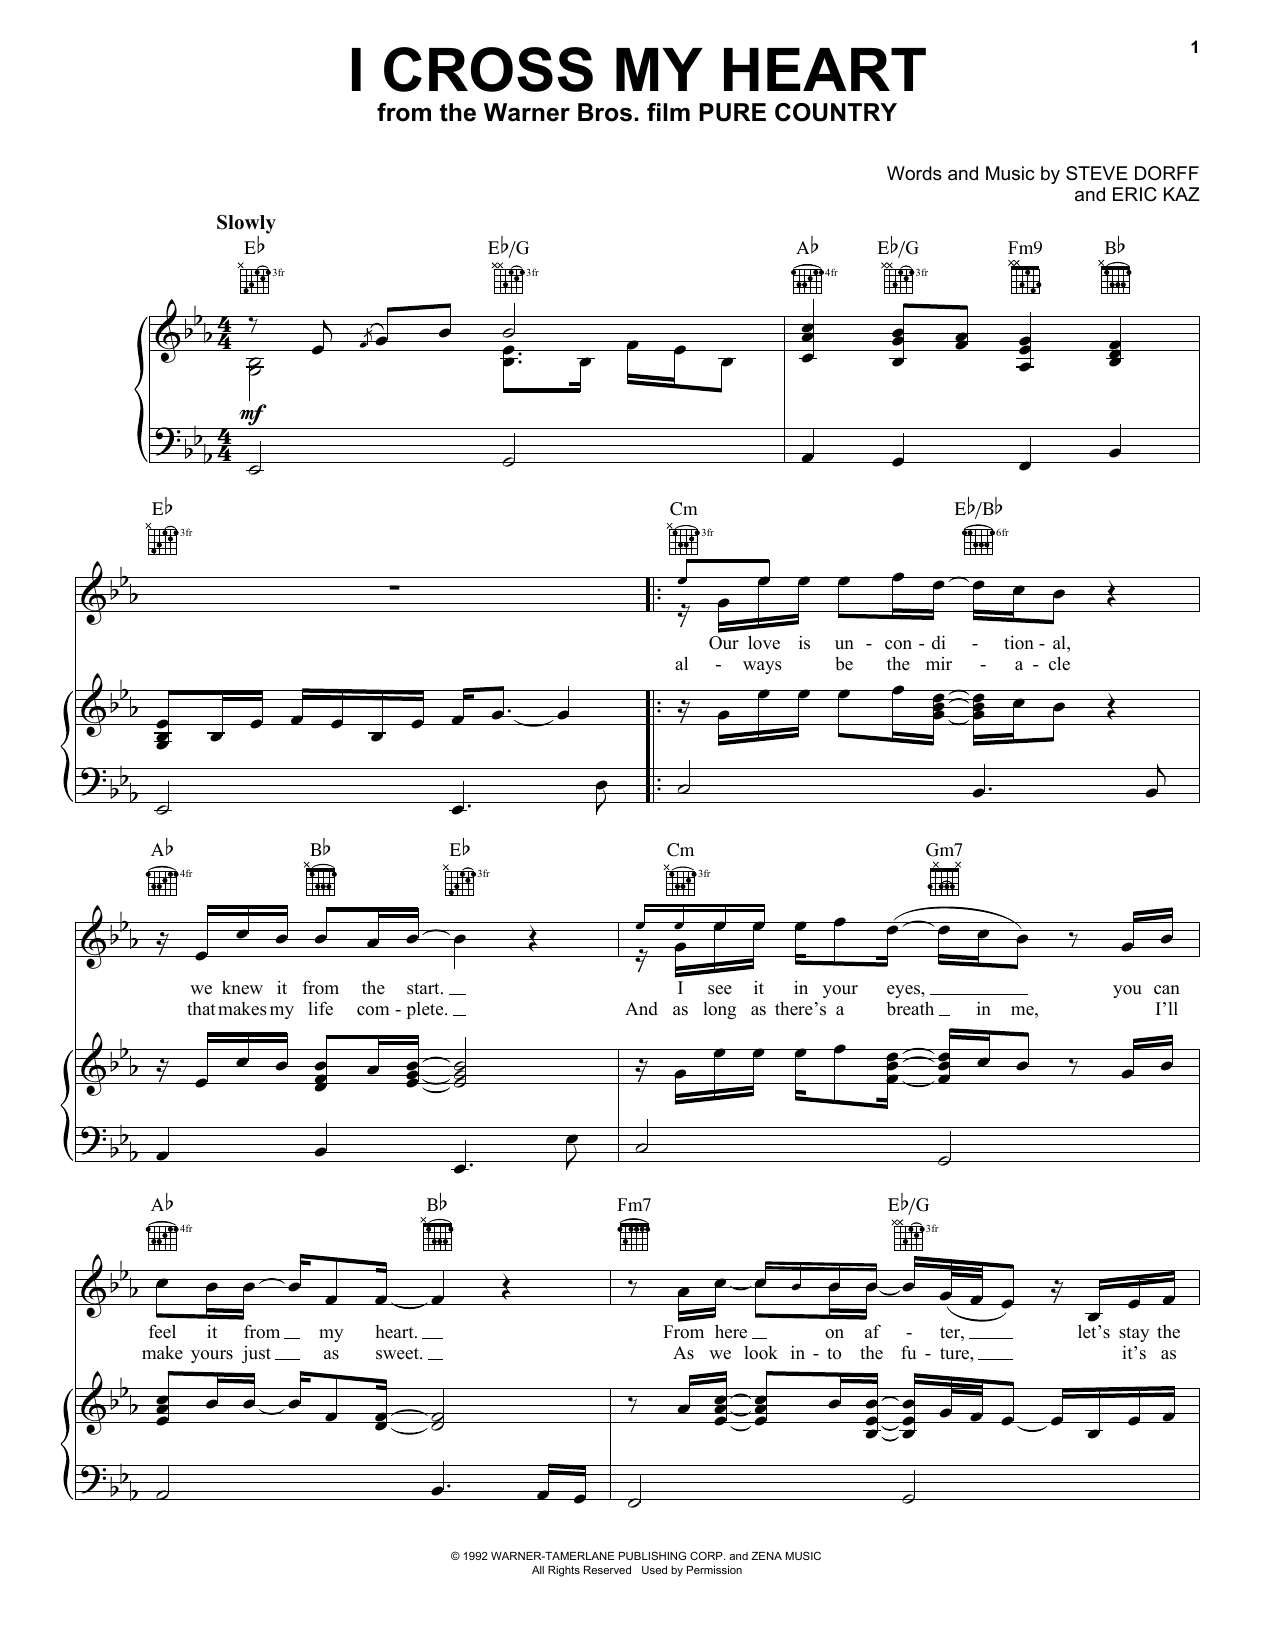 george-strait-i-cross-my-heart-sheet-music-pdf-notes-chords